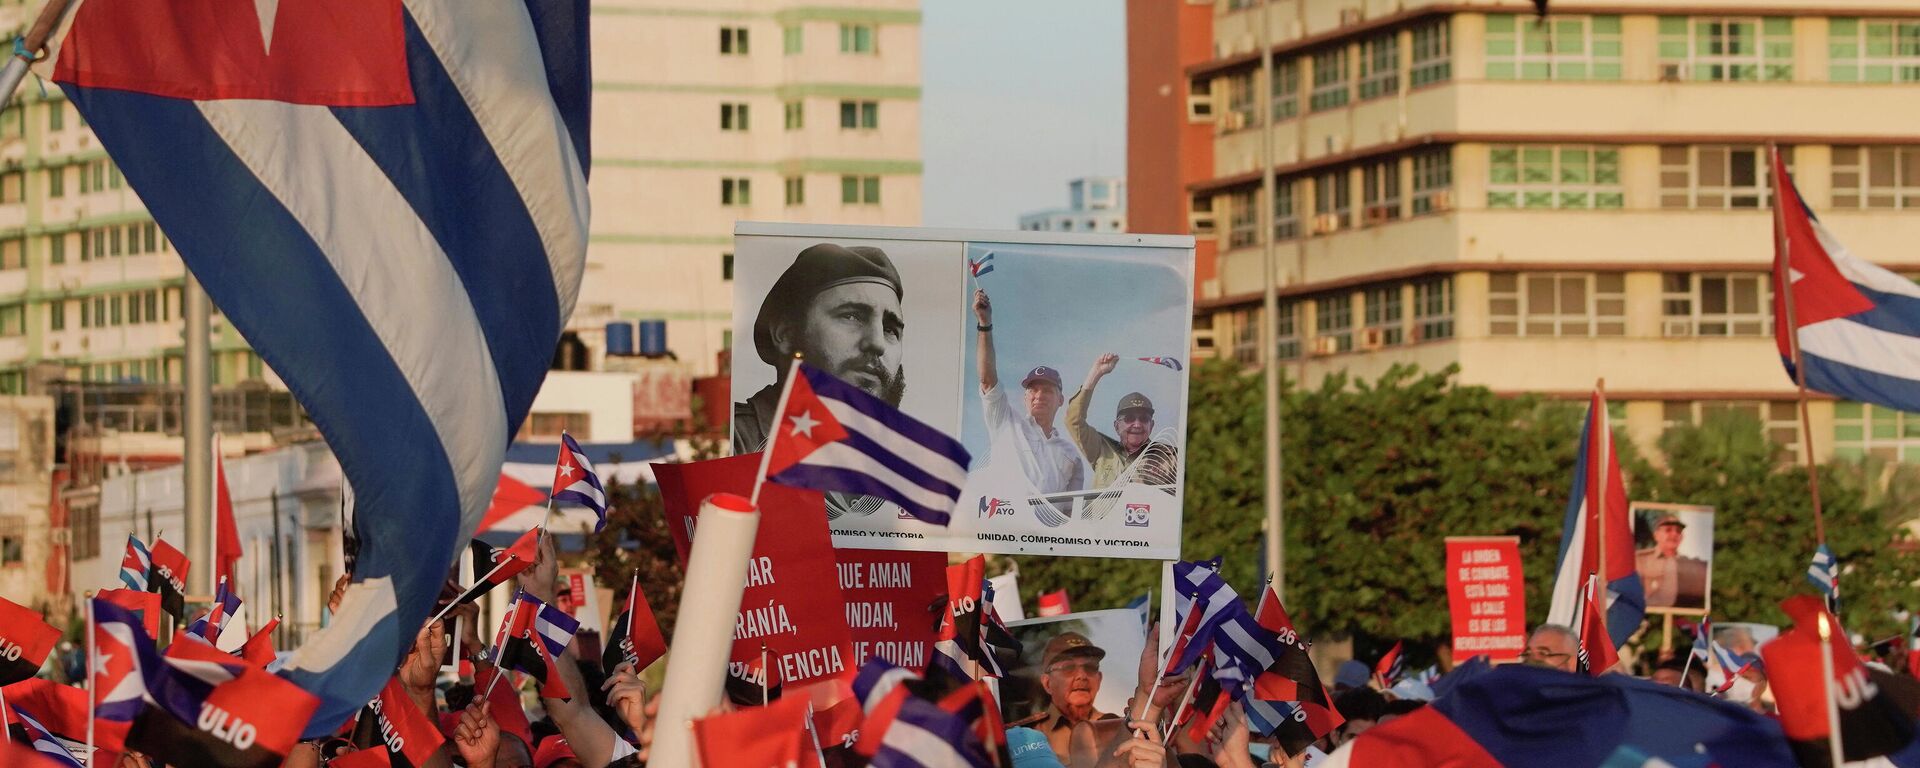 Manifestación en Cuba - Sputnik Mundo, 1920, 04.08.2021